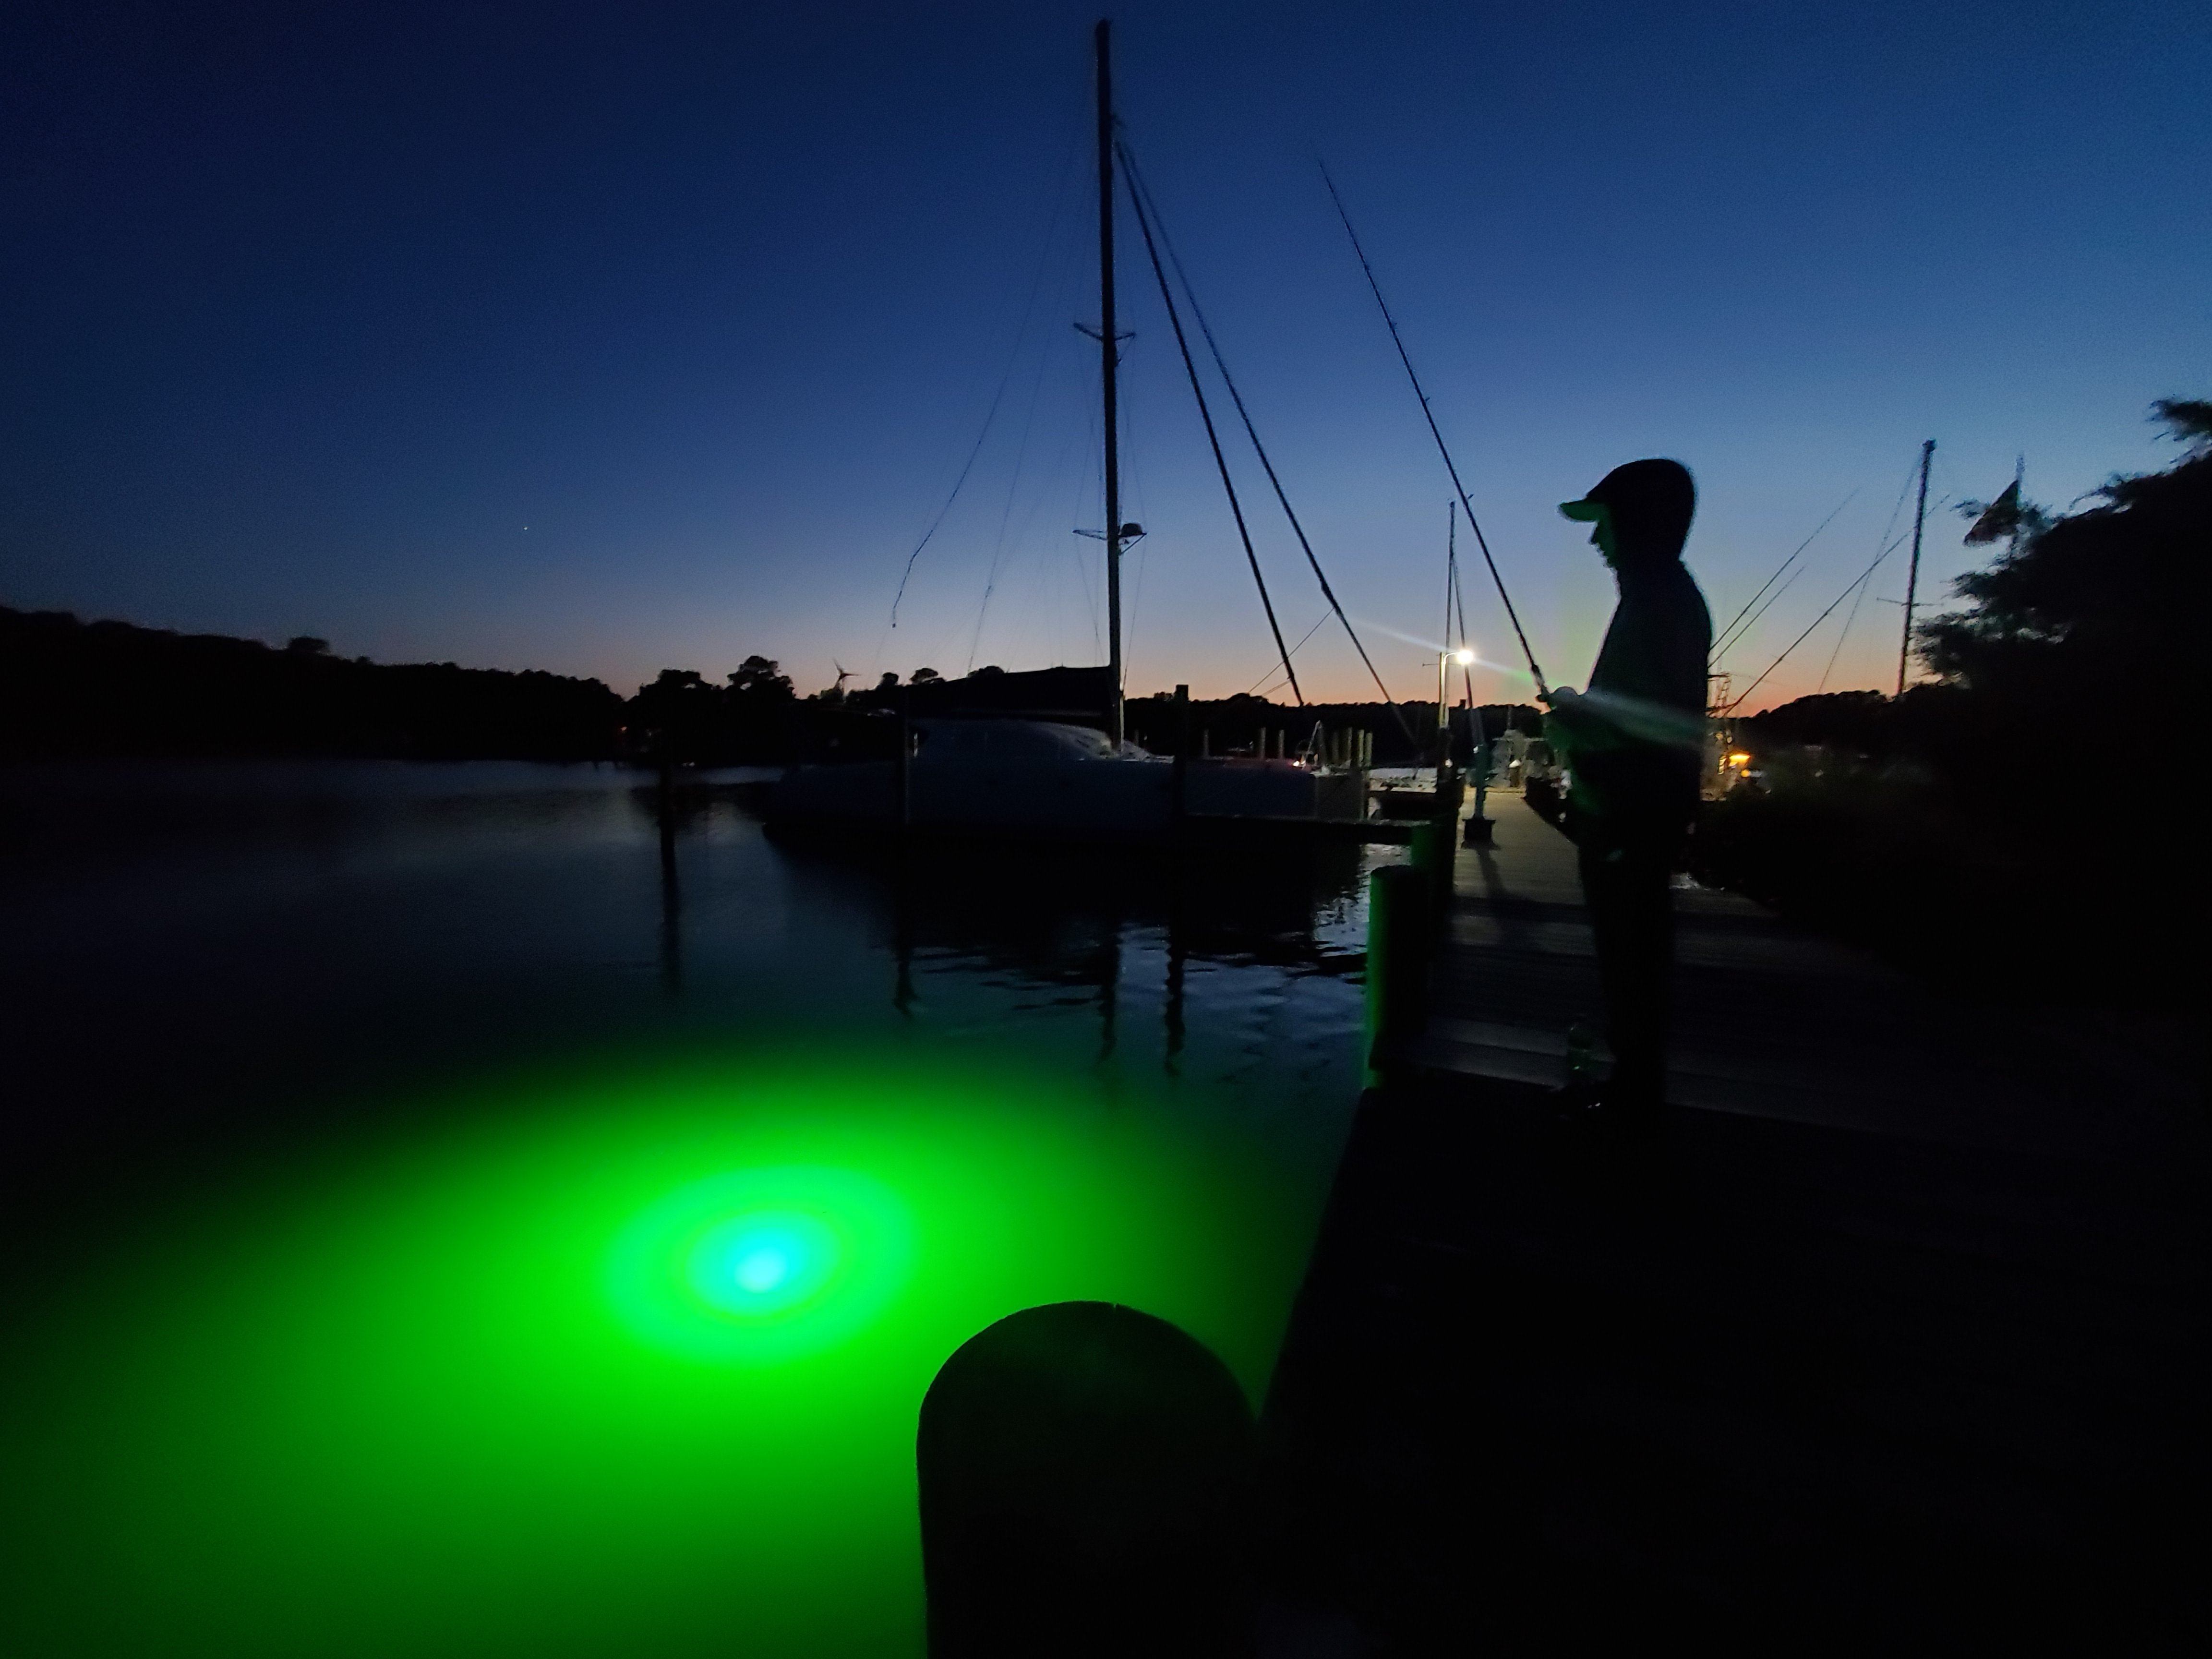 Green Blob Outdoors Multi-Color LED Underwater Fishing Light, 110V  Portable, for Docks, Ponds, or Backyard Pools (Multi-Color 15000 Lumen)